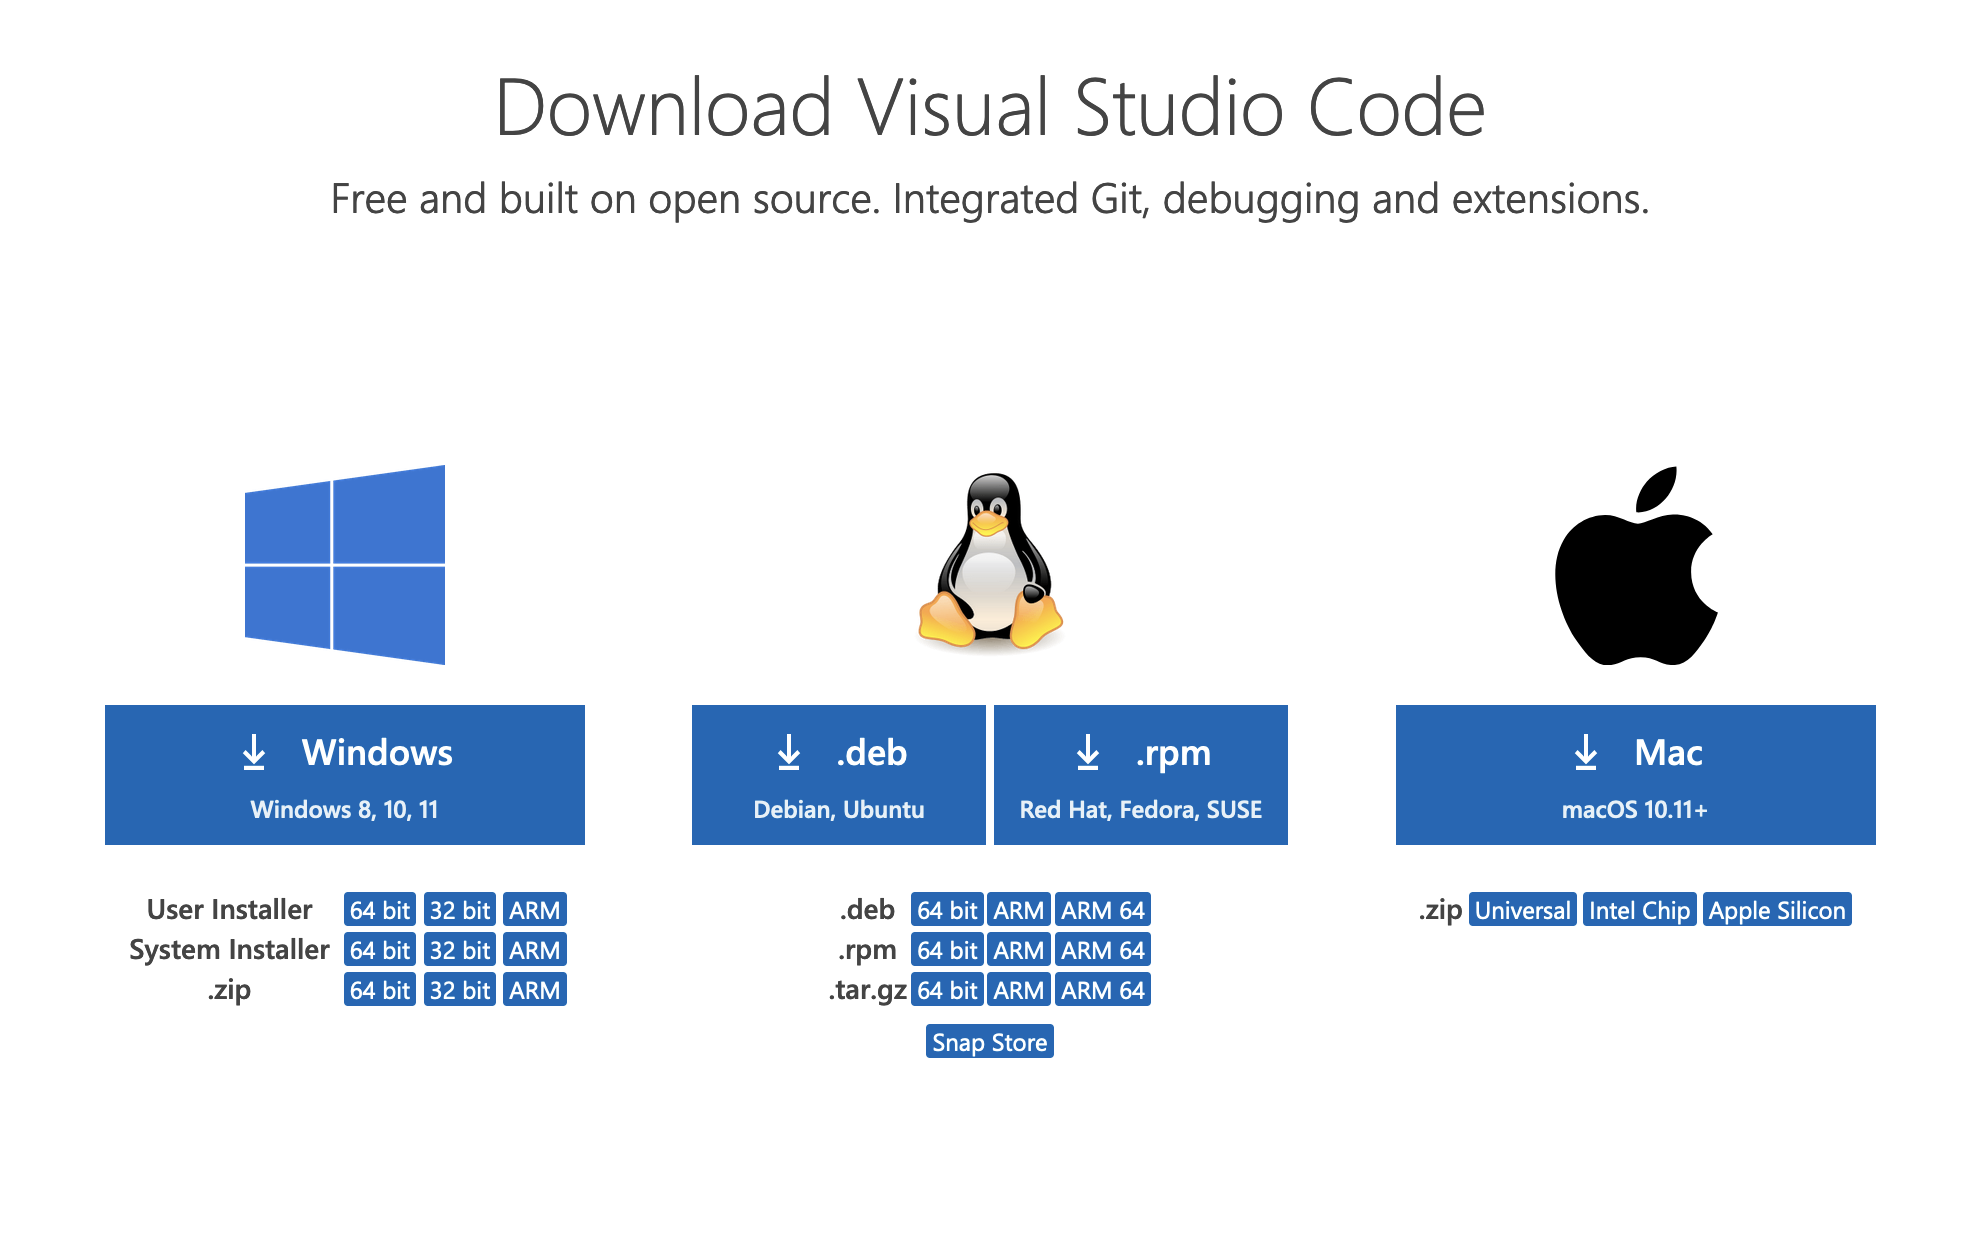 The website for Visual Studio Code downloads